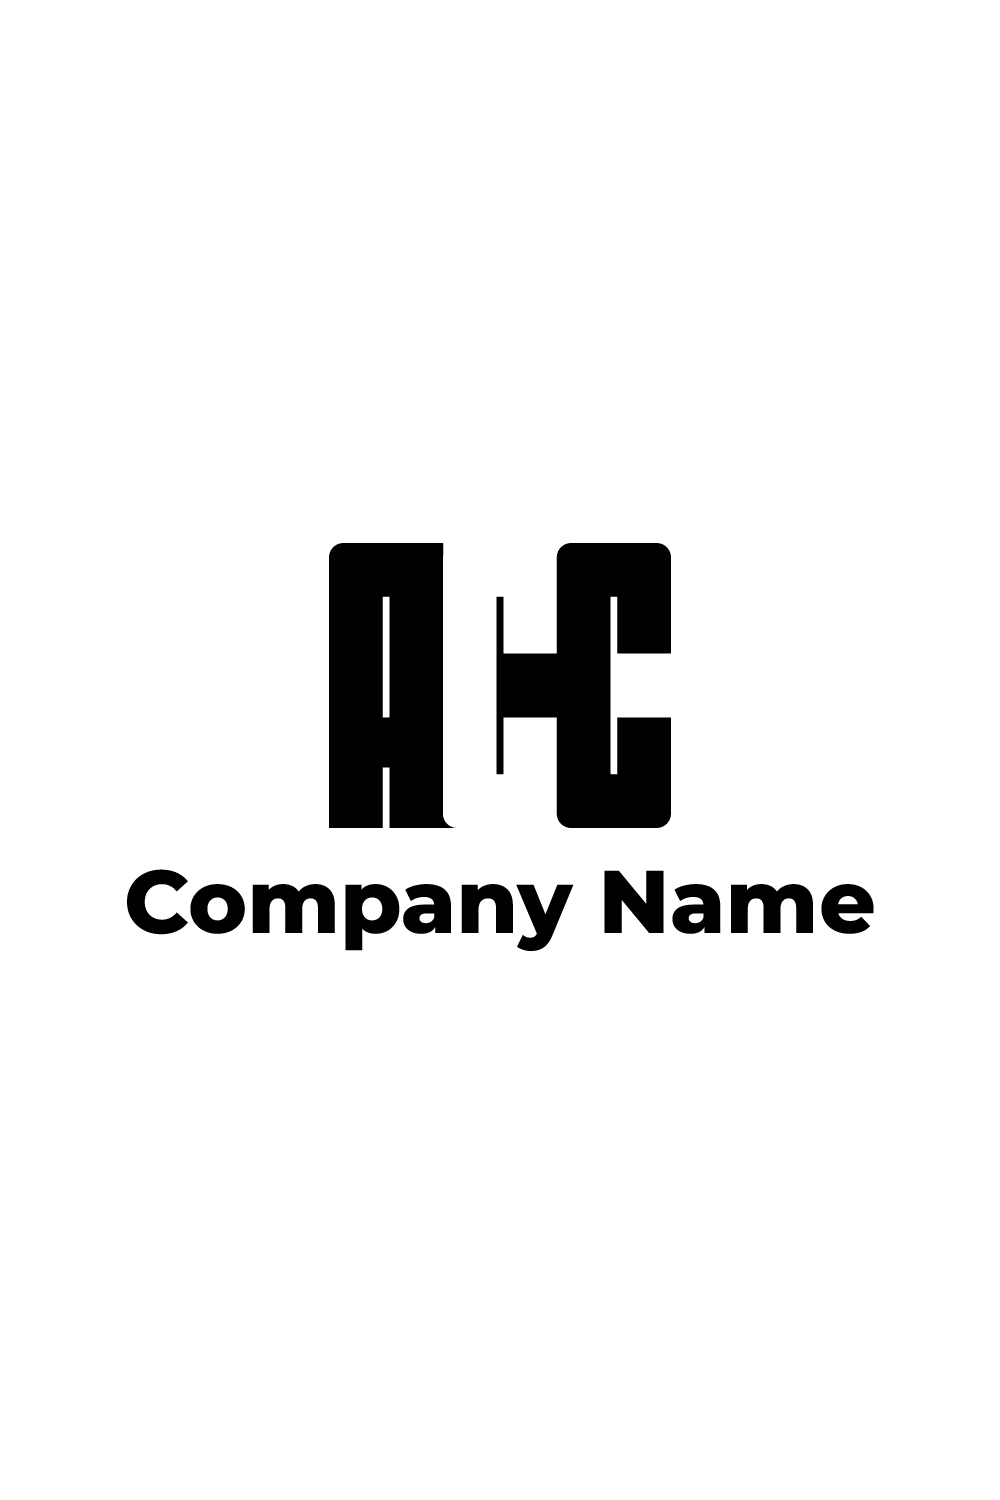 Acc logo pinterest preview image.